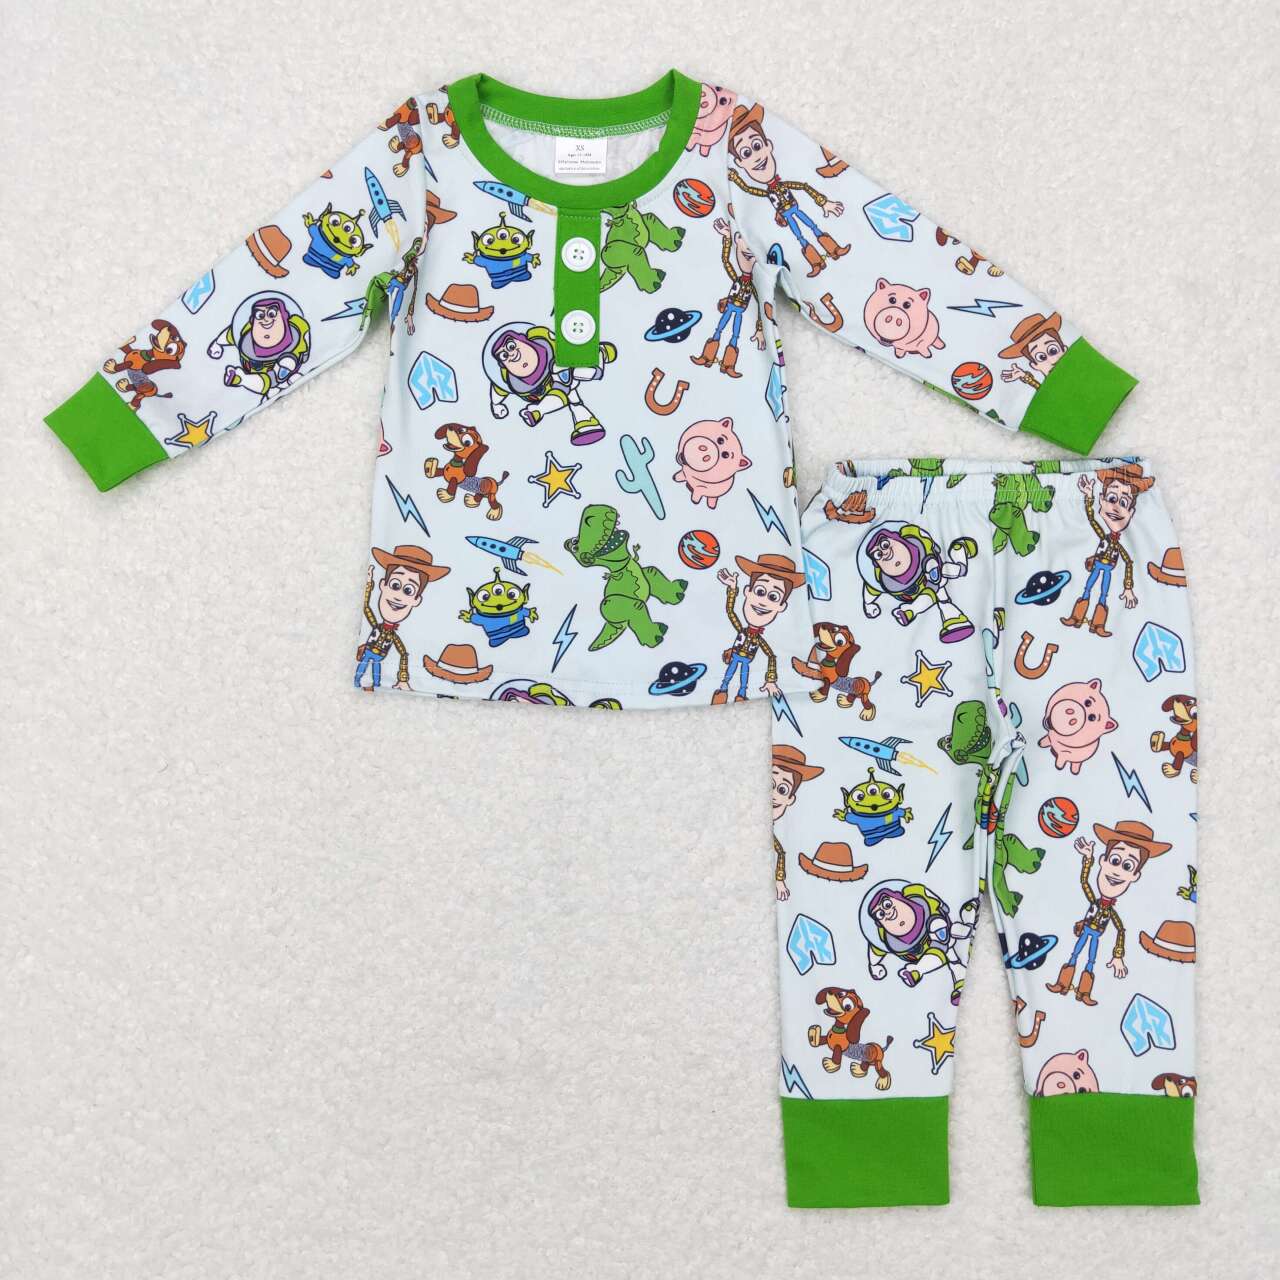 BLP0411 Cartoon Toy Character Boys Green Pajamas Clothes Set